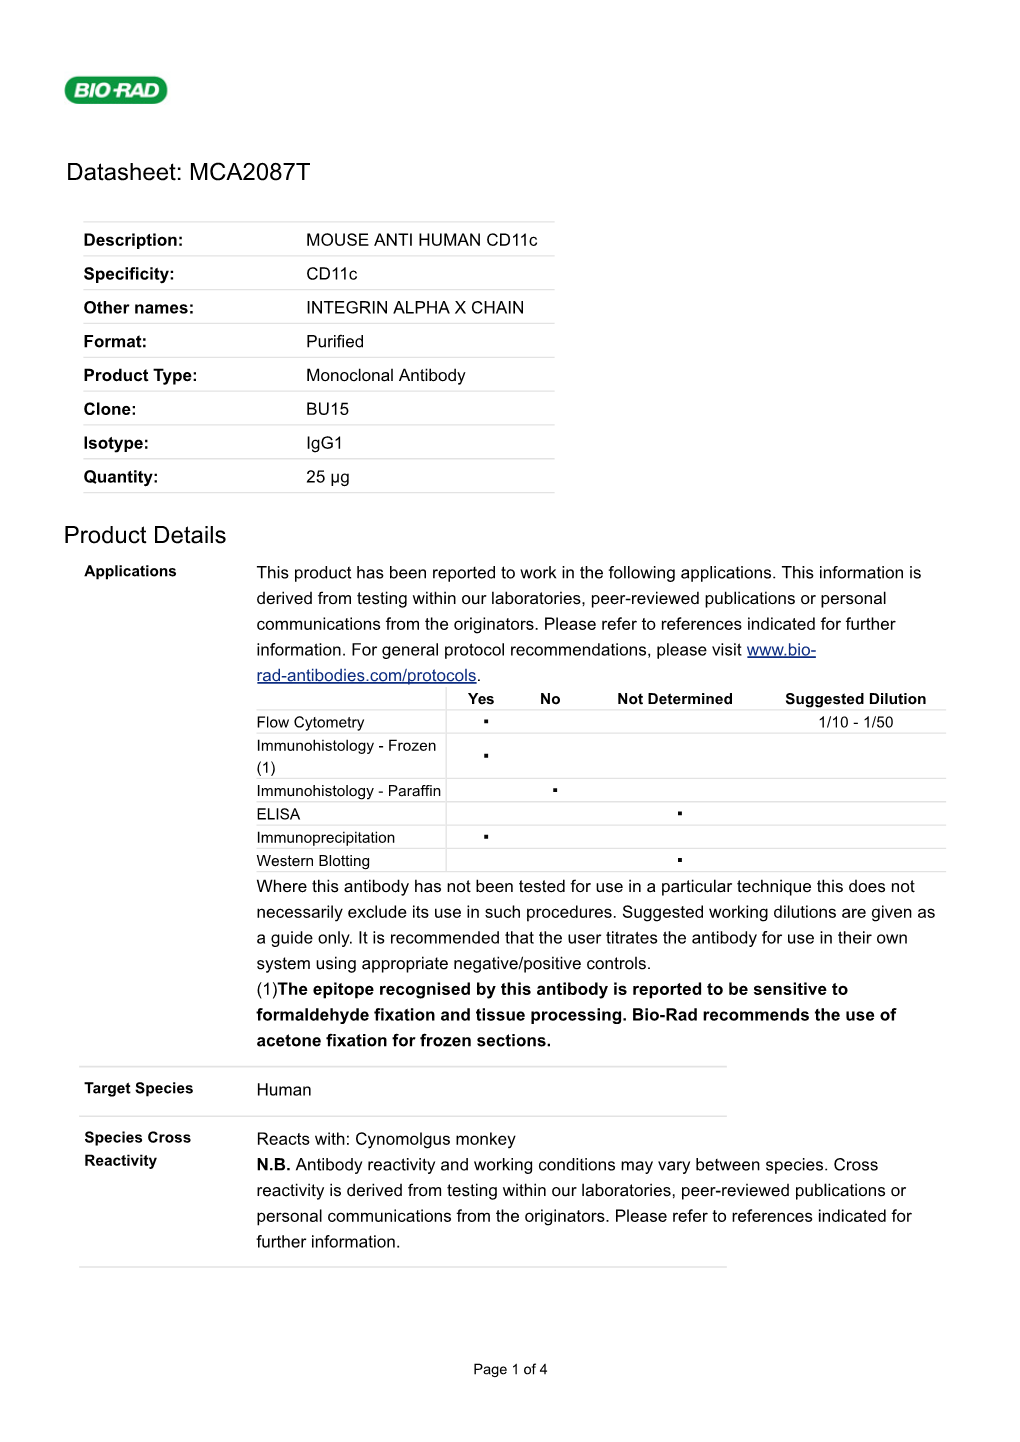 Datasheet: MCA2087T Product Details